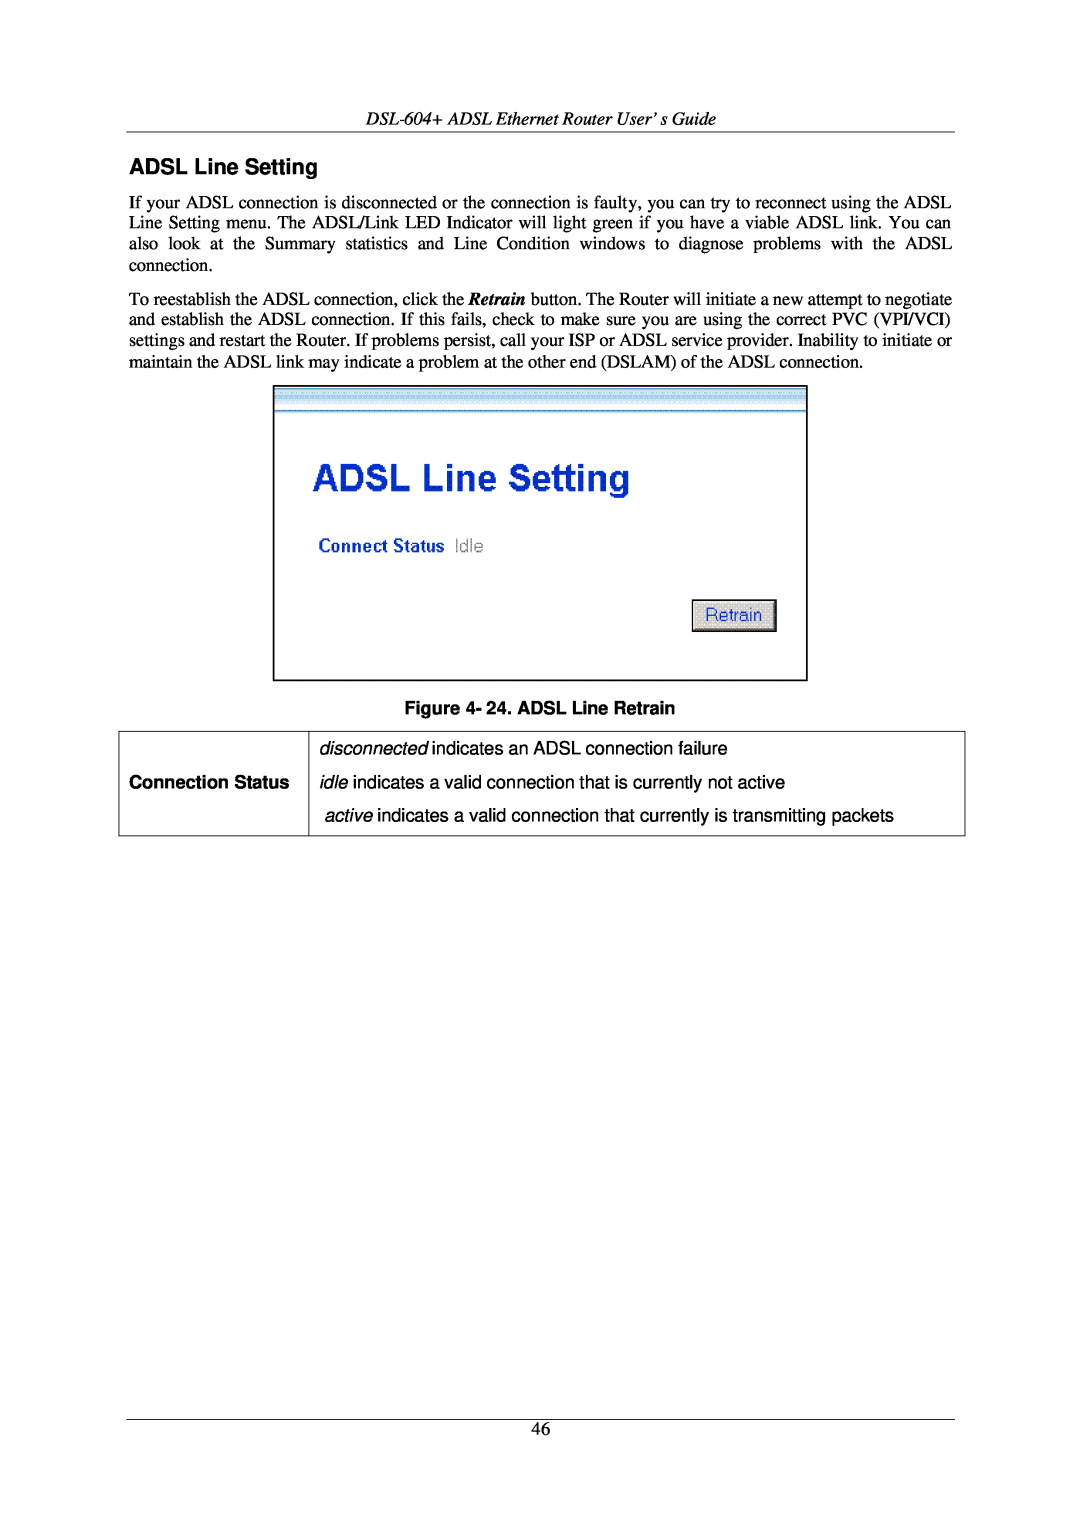 D-Link manual ADSL Line Setting, DSL-604+ ADSL Ethernet Router User’s Guide, 24. ADSL Line Retrain, Connection Status 